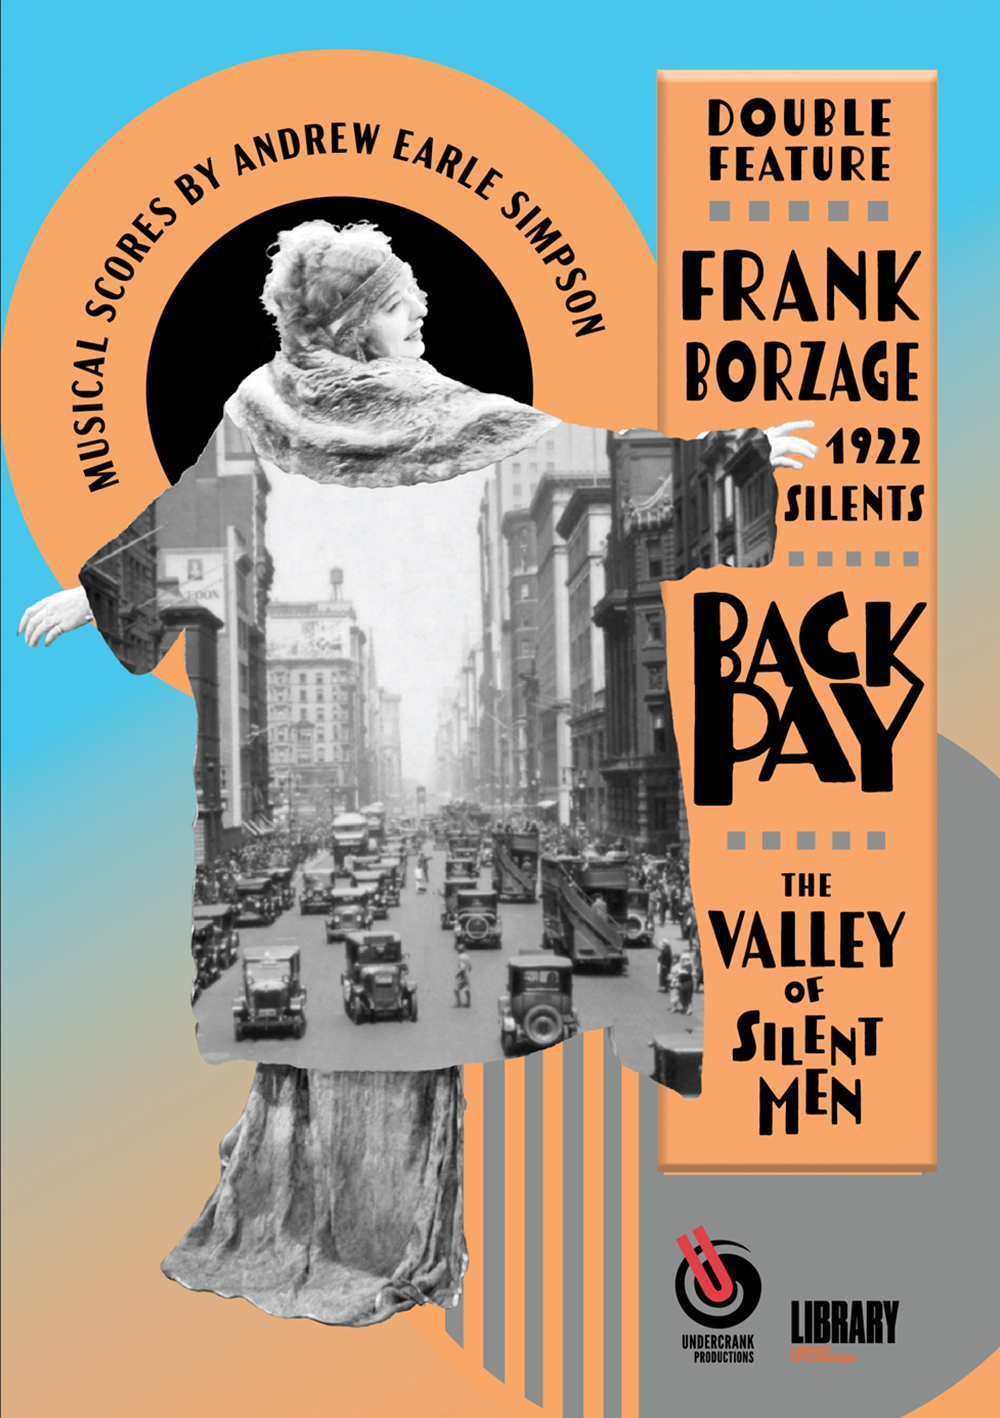 Frank Borzage: 1922 Silents